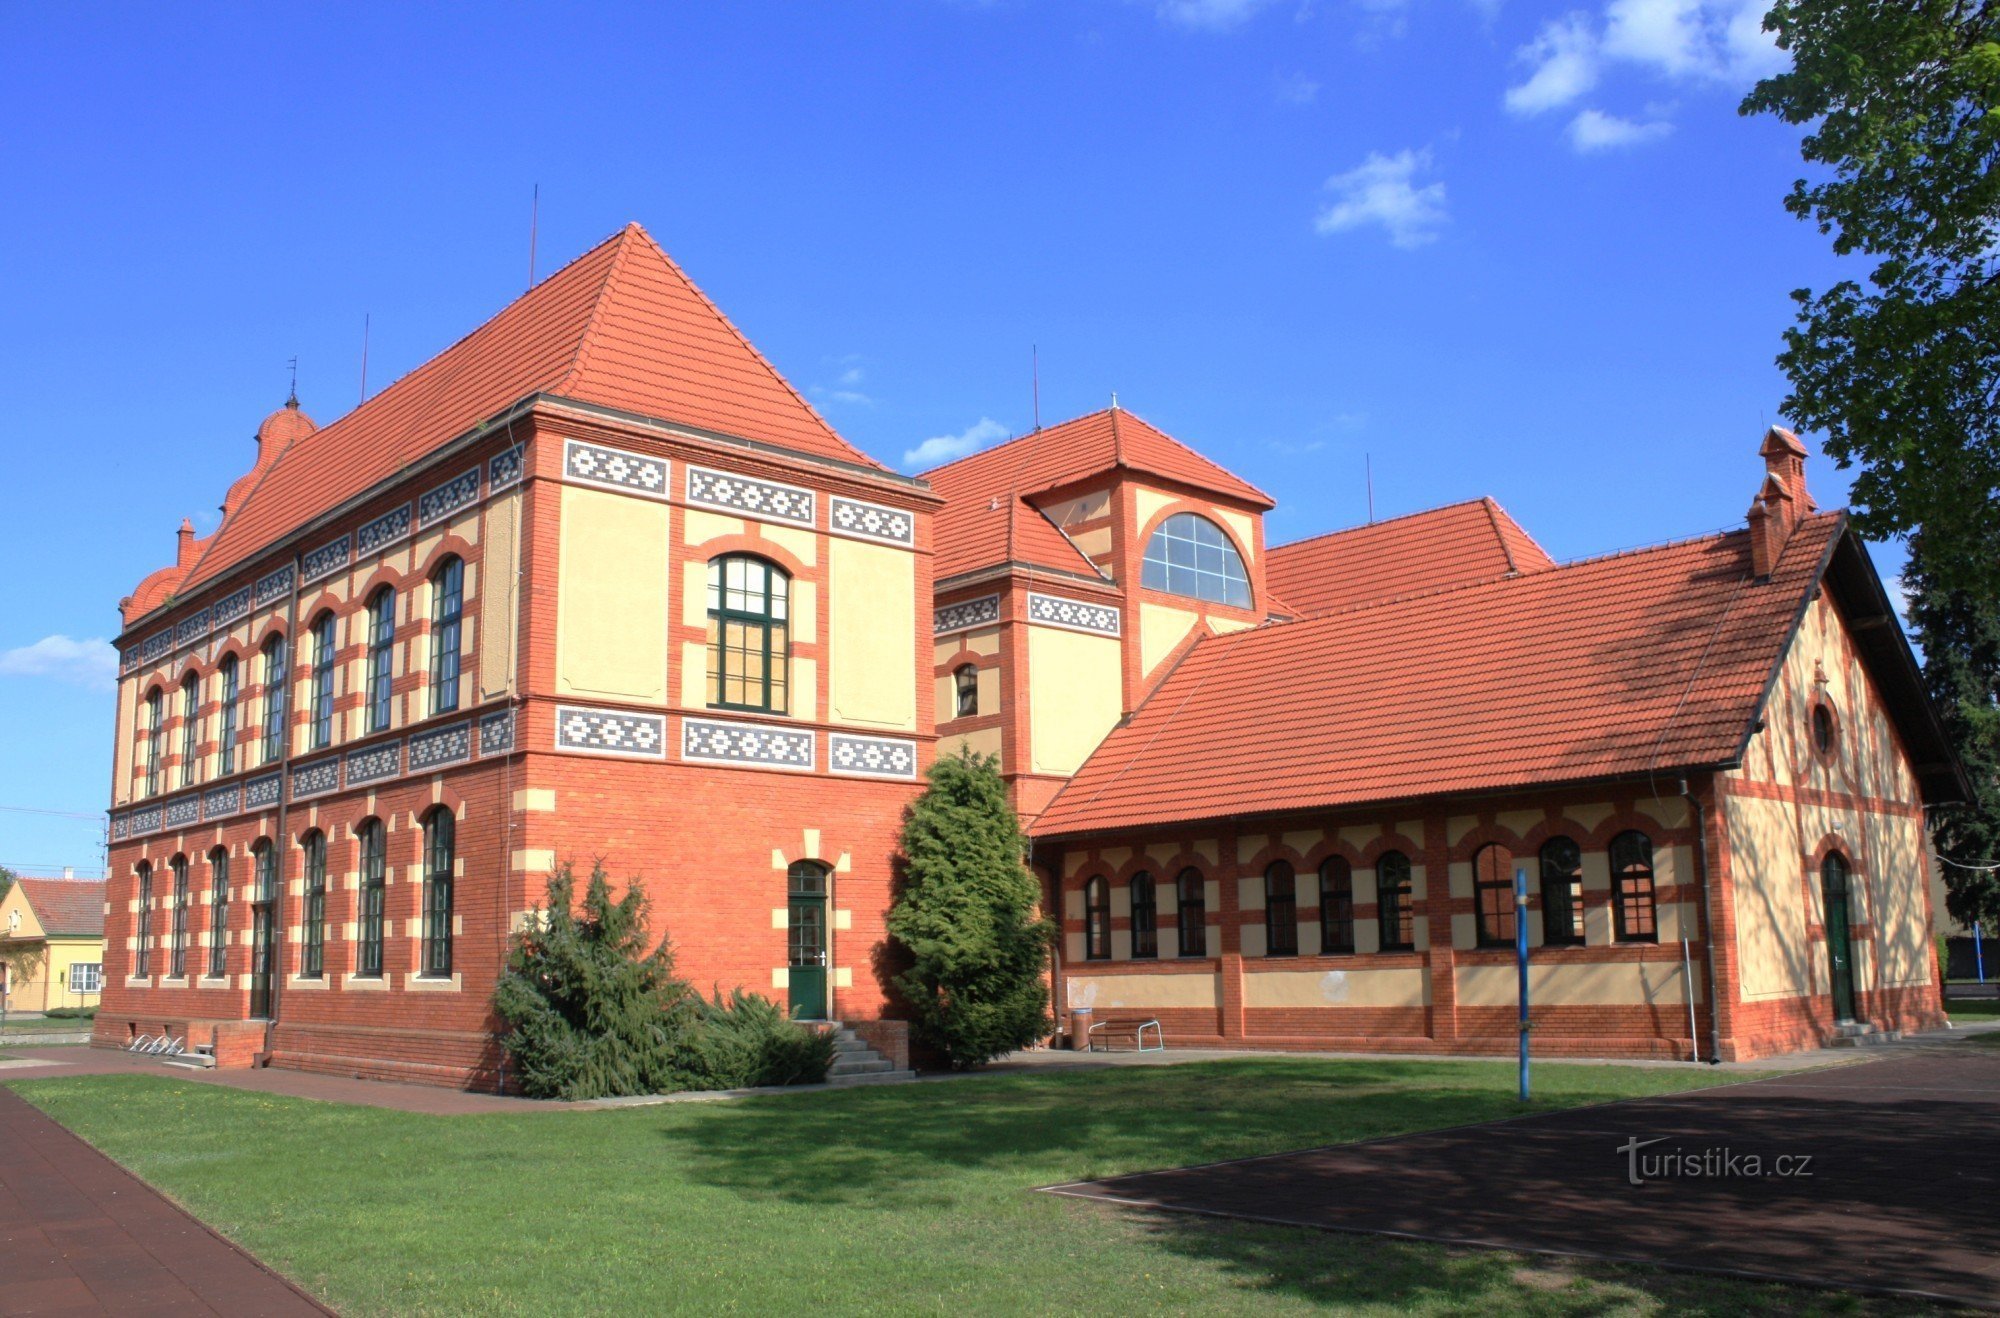 Postkontor - grundskolabyggnad